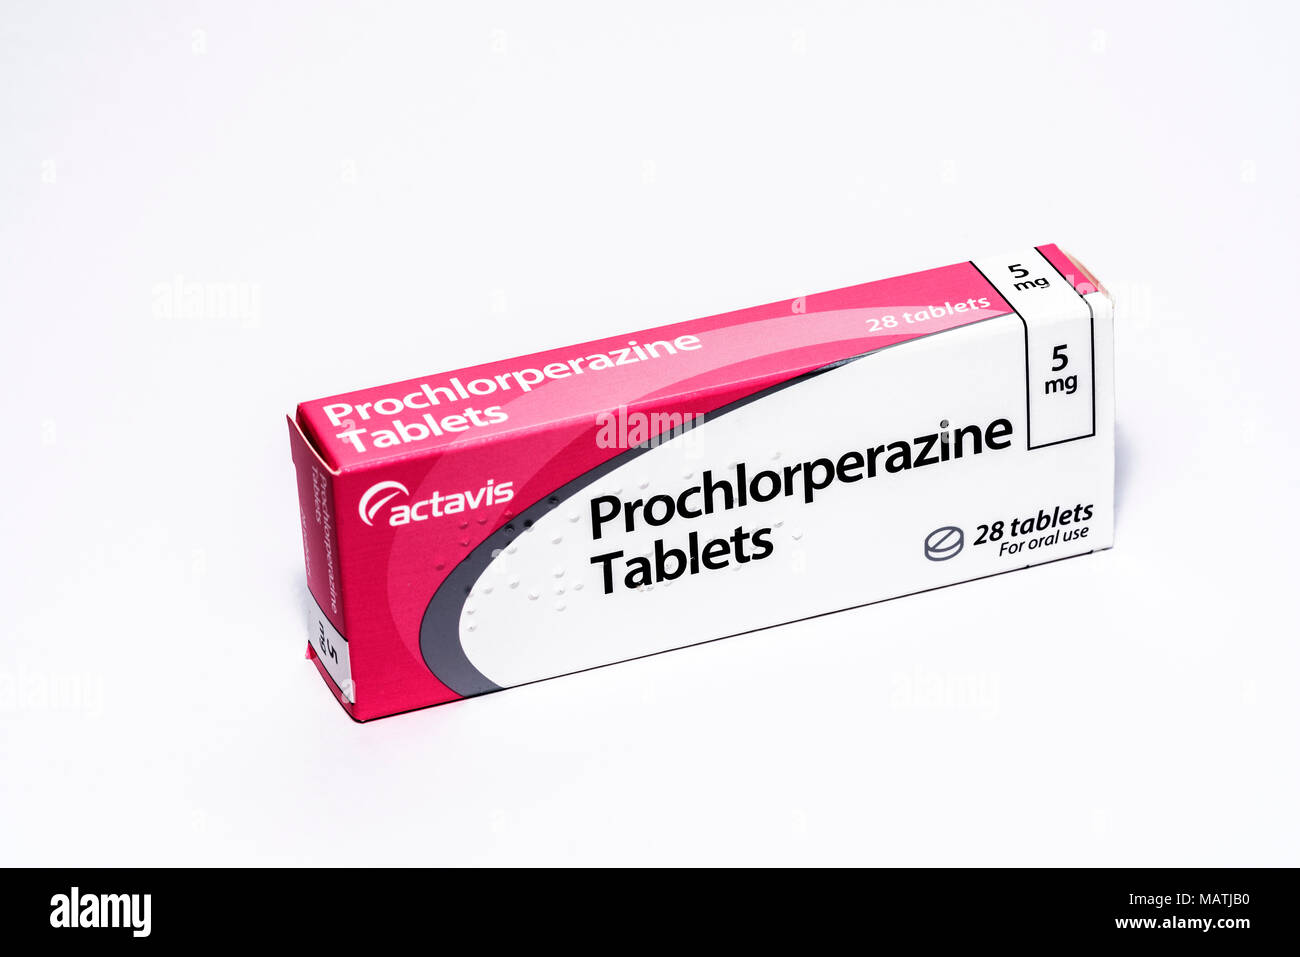 Prochlorperazine tablets anti-nausea and sickness pills. Stock Photo